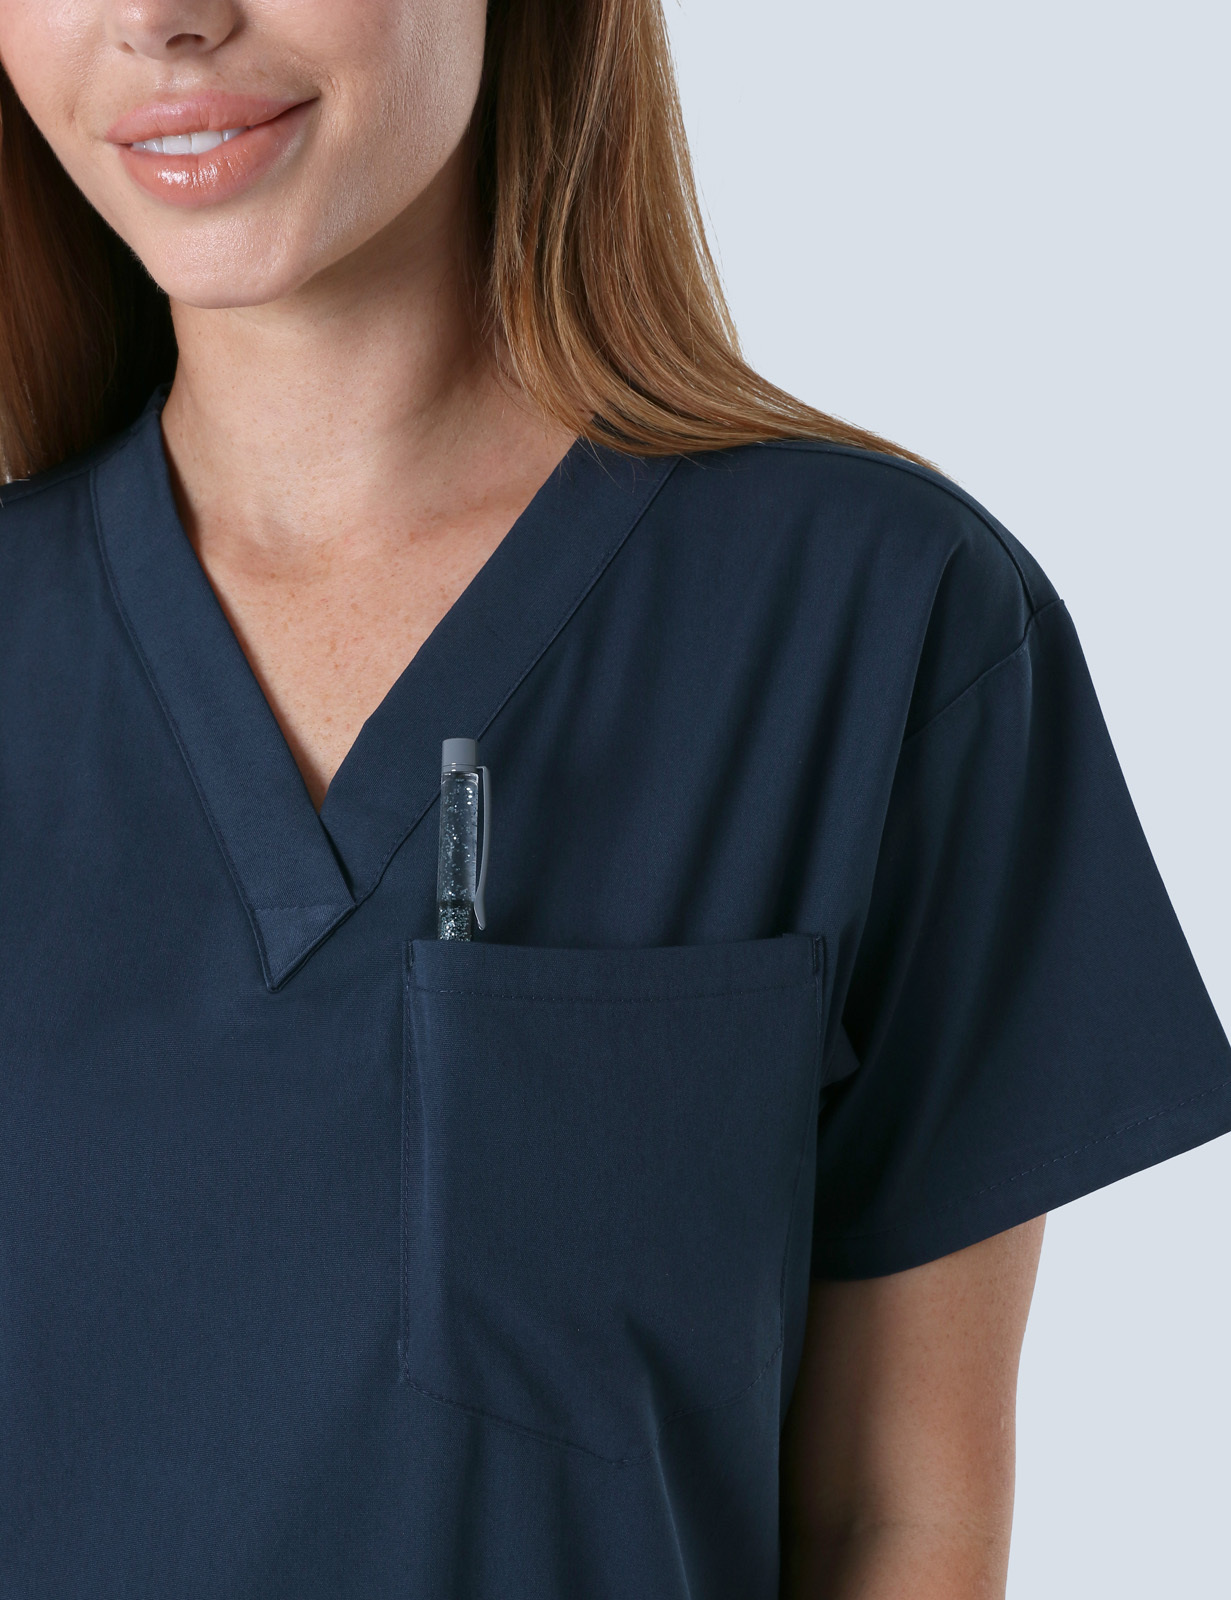  Inglewood MPHS Emergency Department Registered Nurse Unifor Set Bundle (4 Pocket Top and Cargo Pants in Navy + Logo)